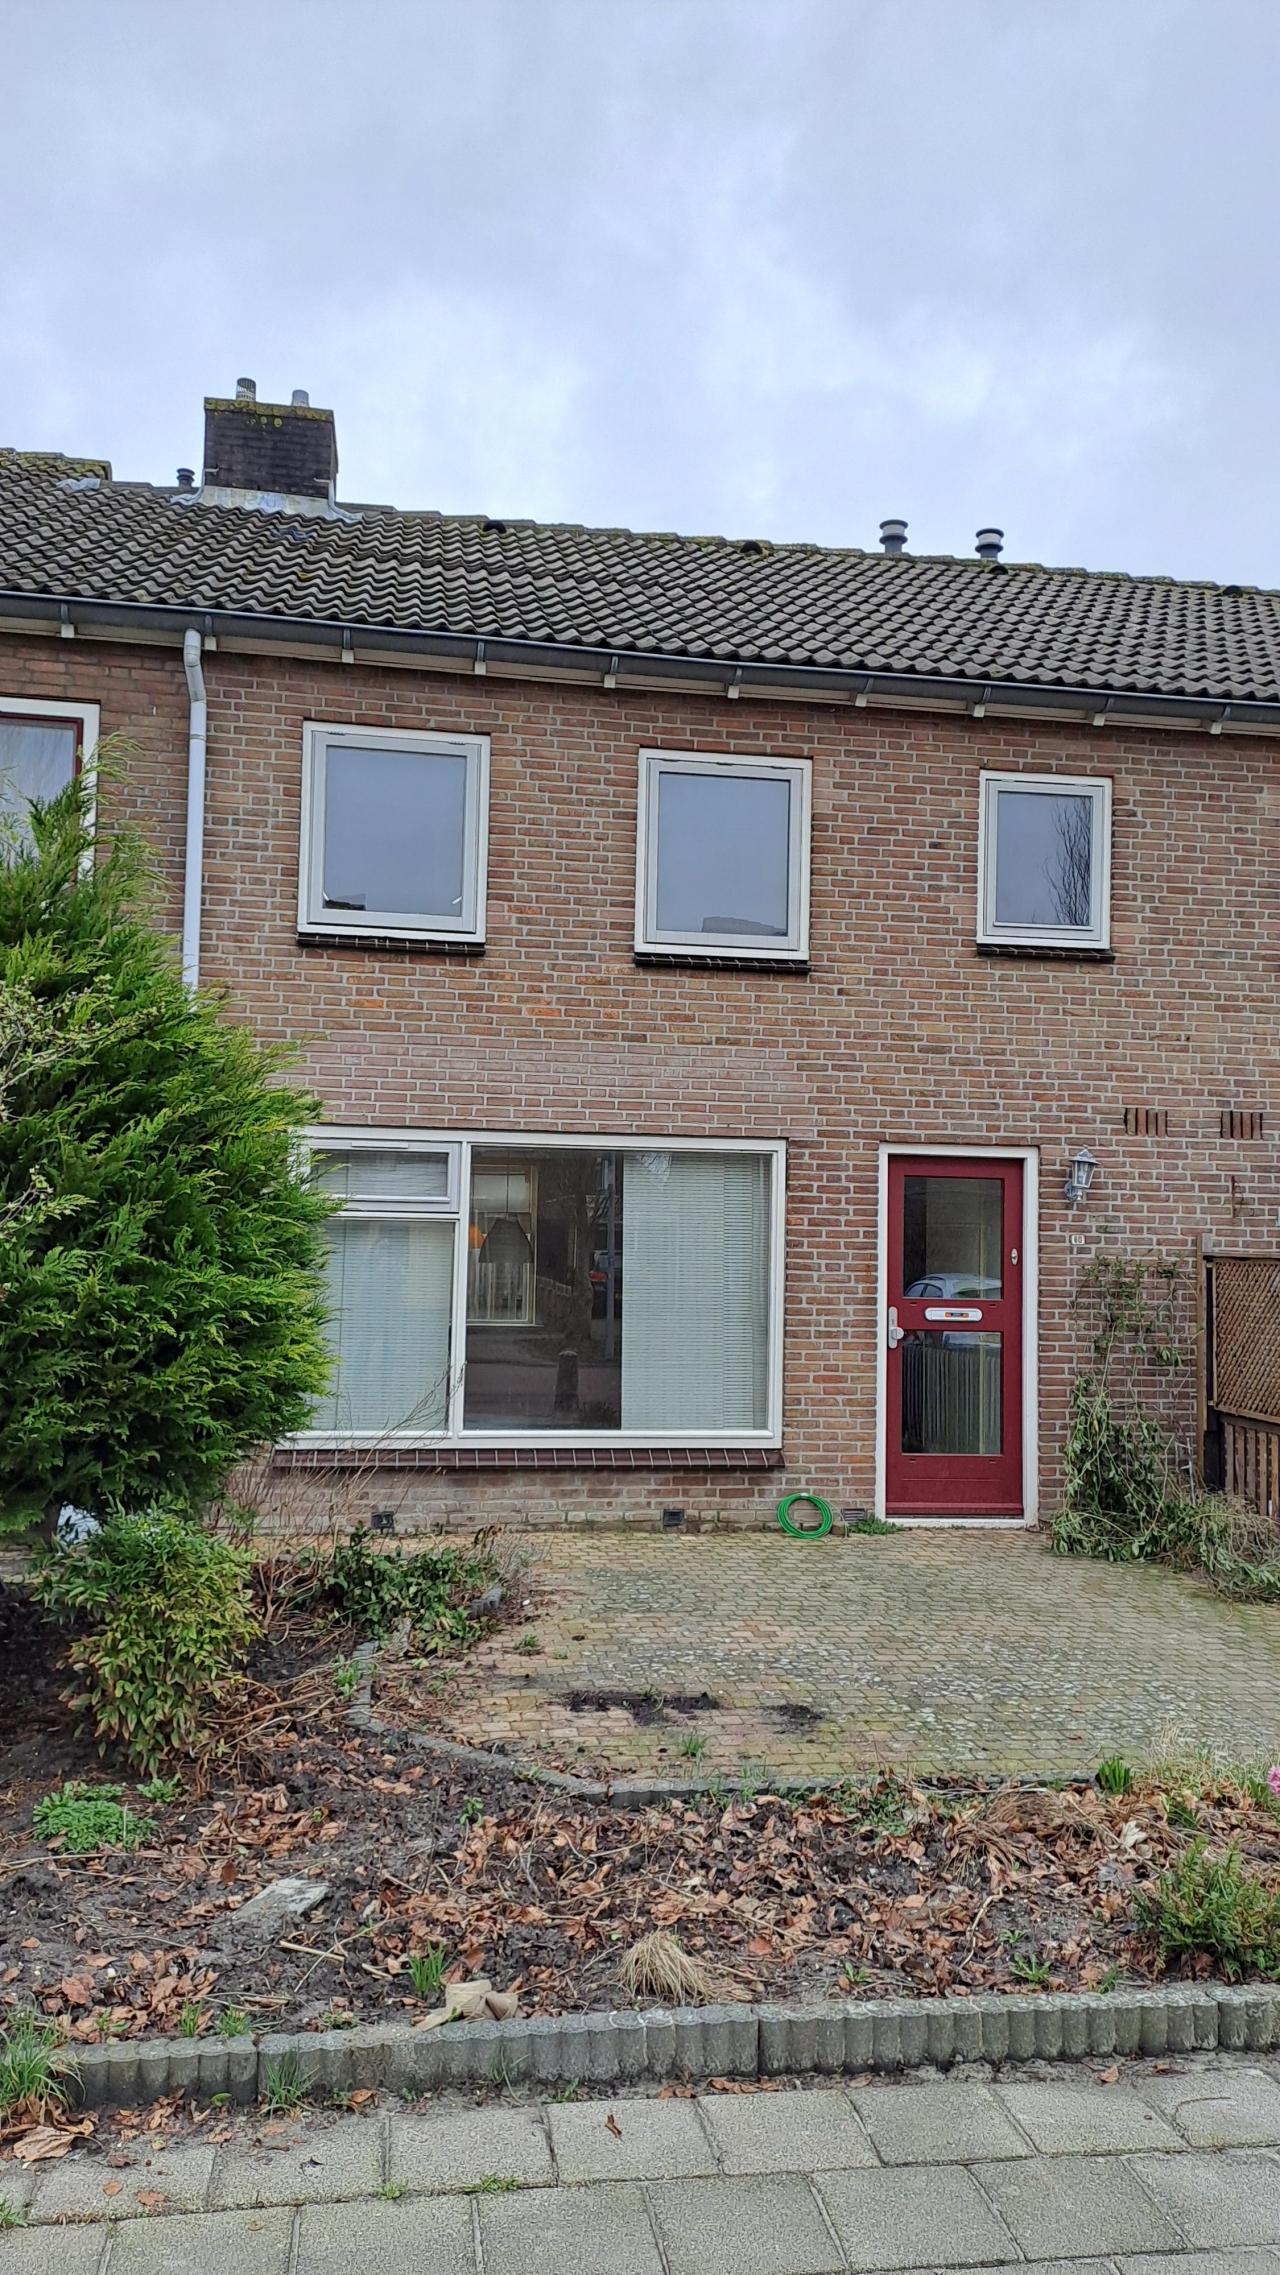 Doctor Colijnstraat 60, 1775 CJ Middenmeer, Nederland